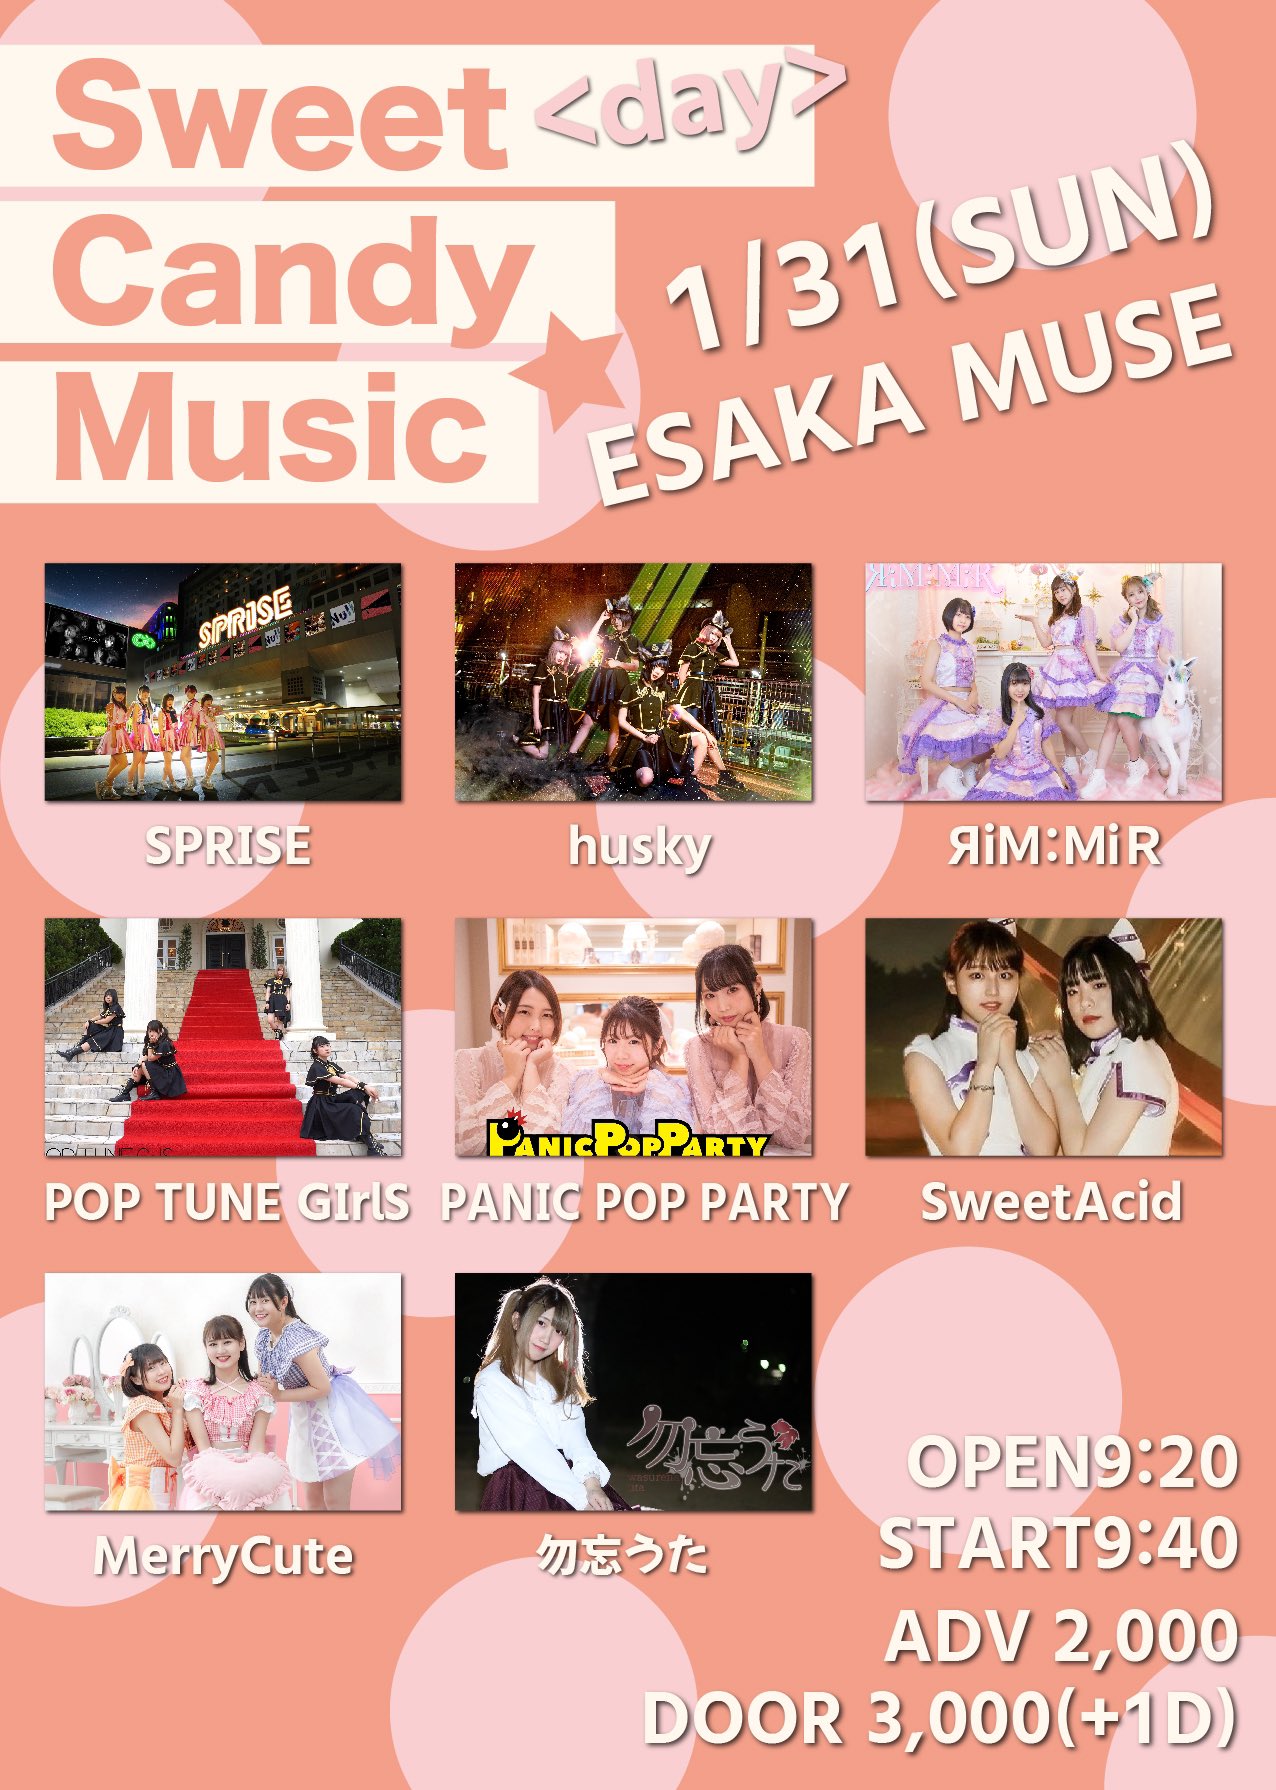 Sweet Candy Music★ at ESAKA MUSE [Day]